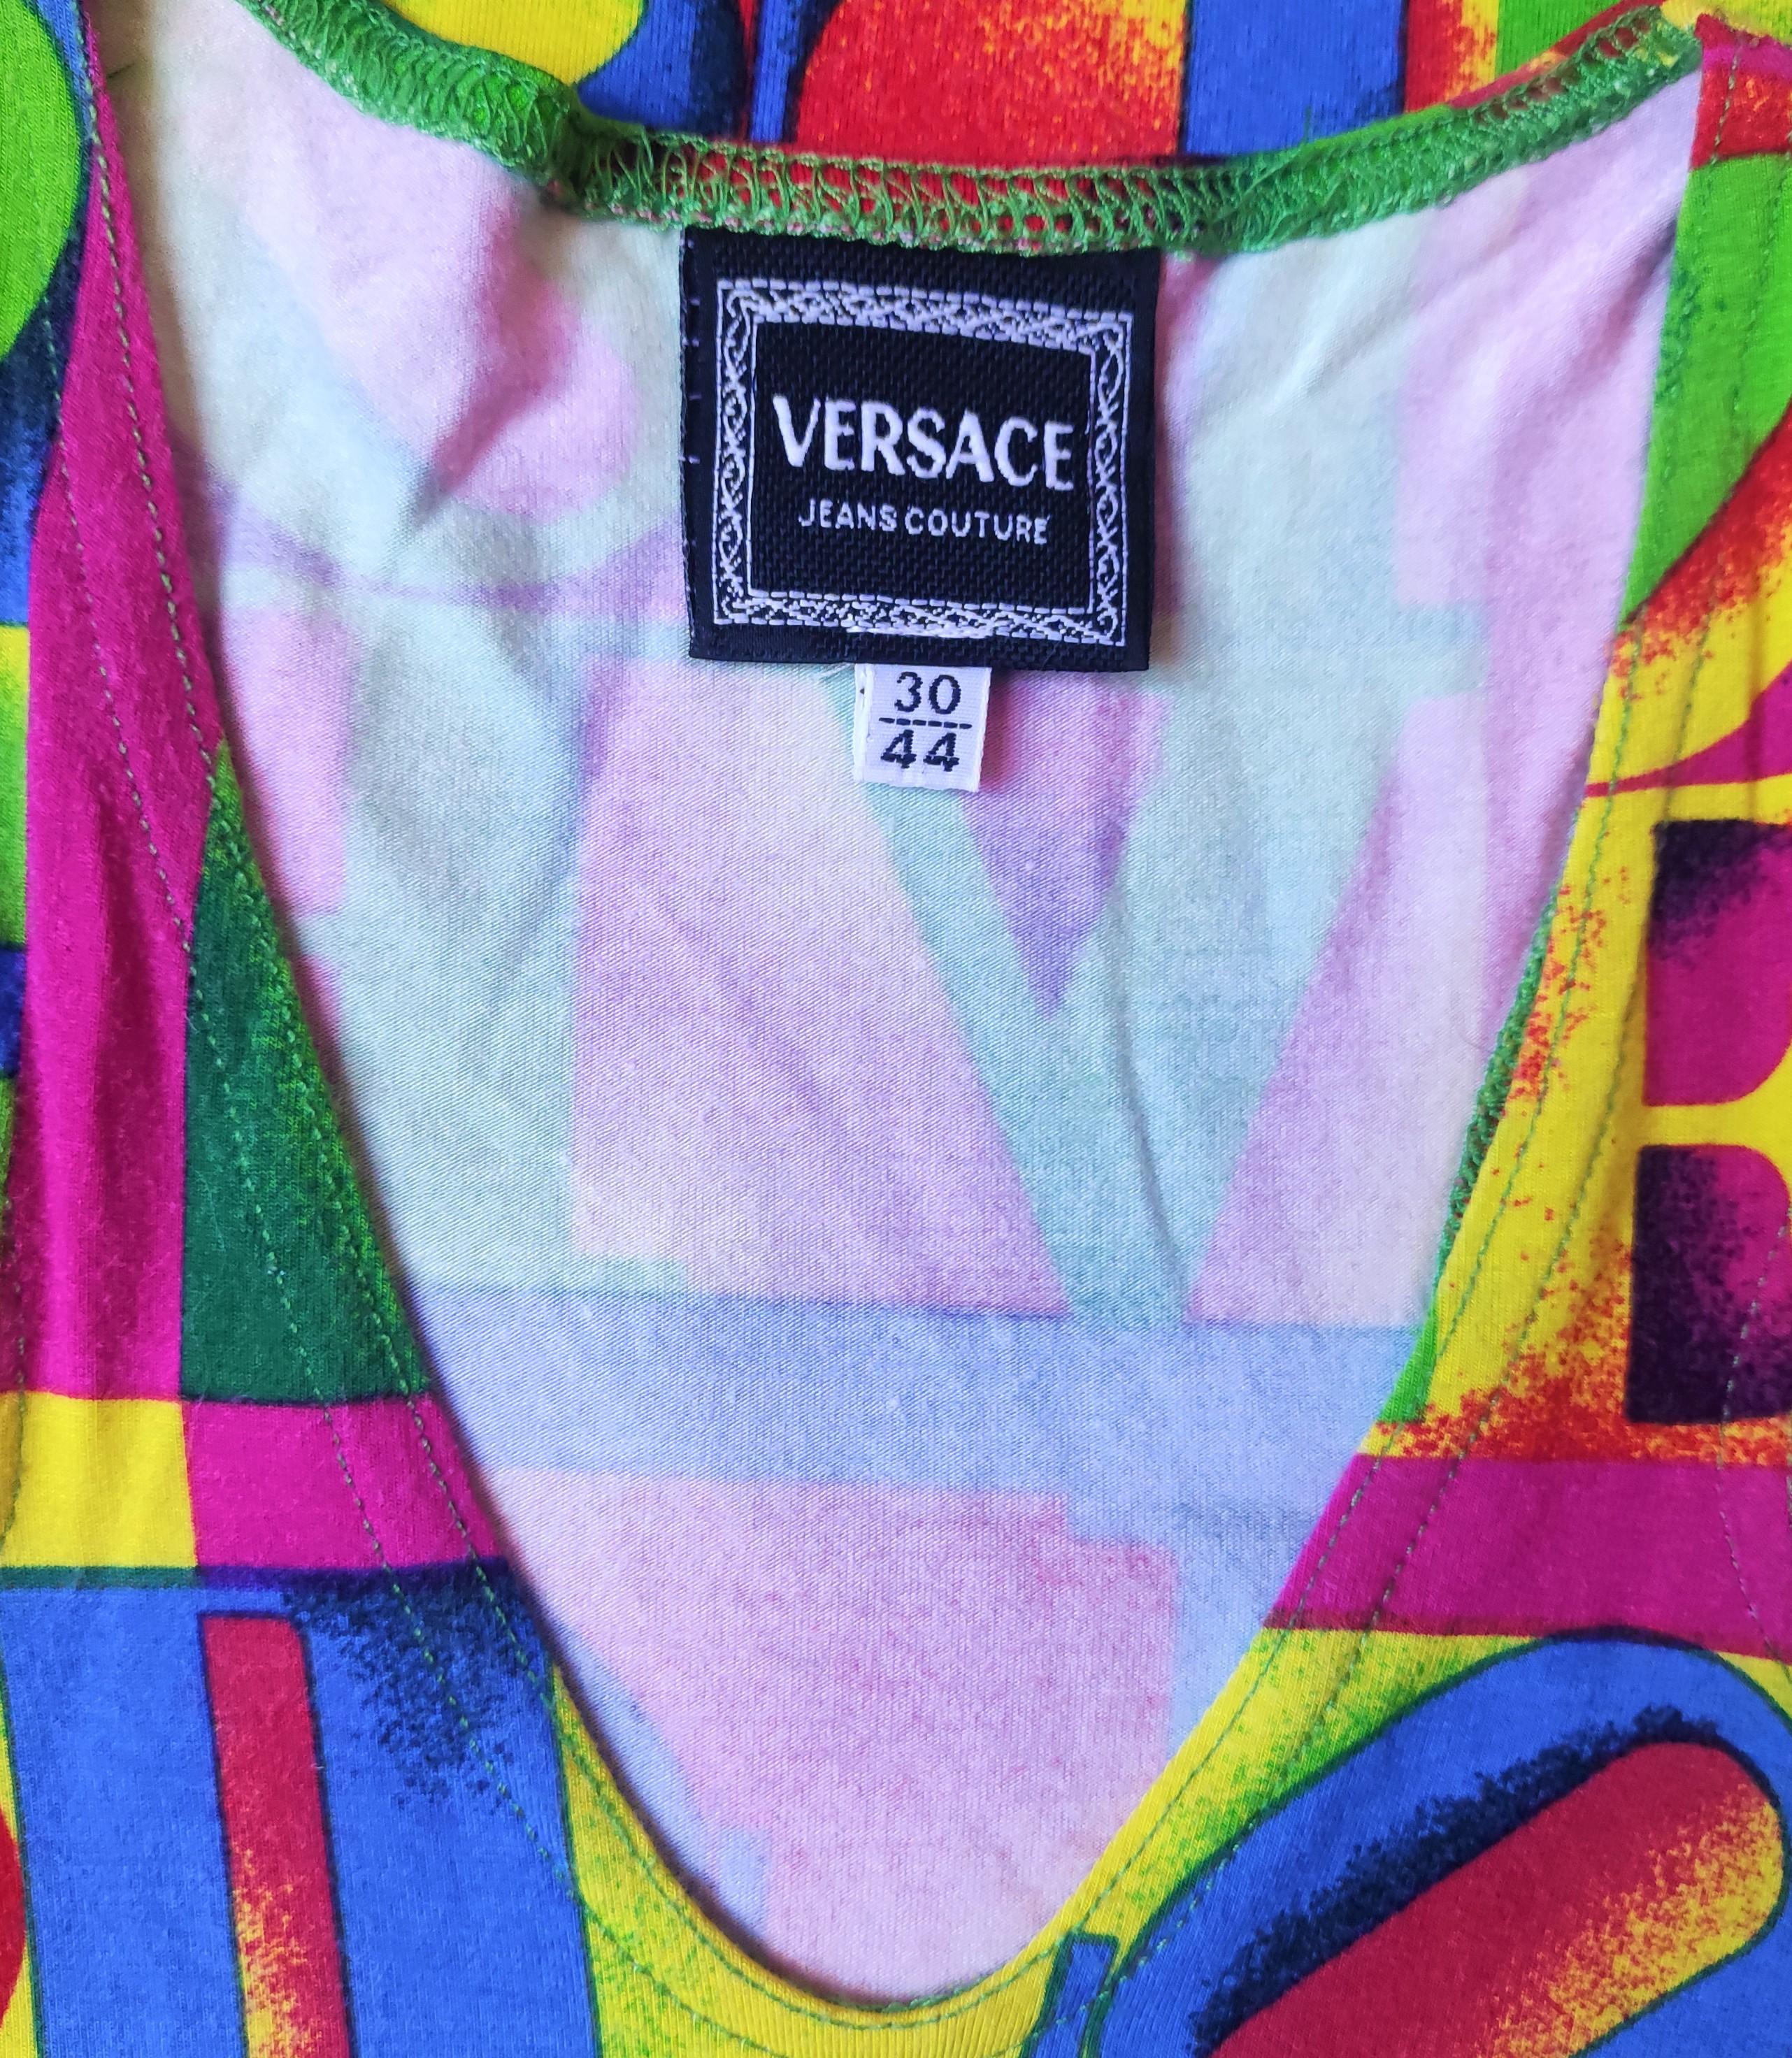 Gianni Versace Couture LOVE Neon Pop Art Marilyn Monroe Betty Boop 90's Dress For Sale 6